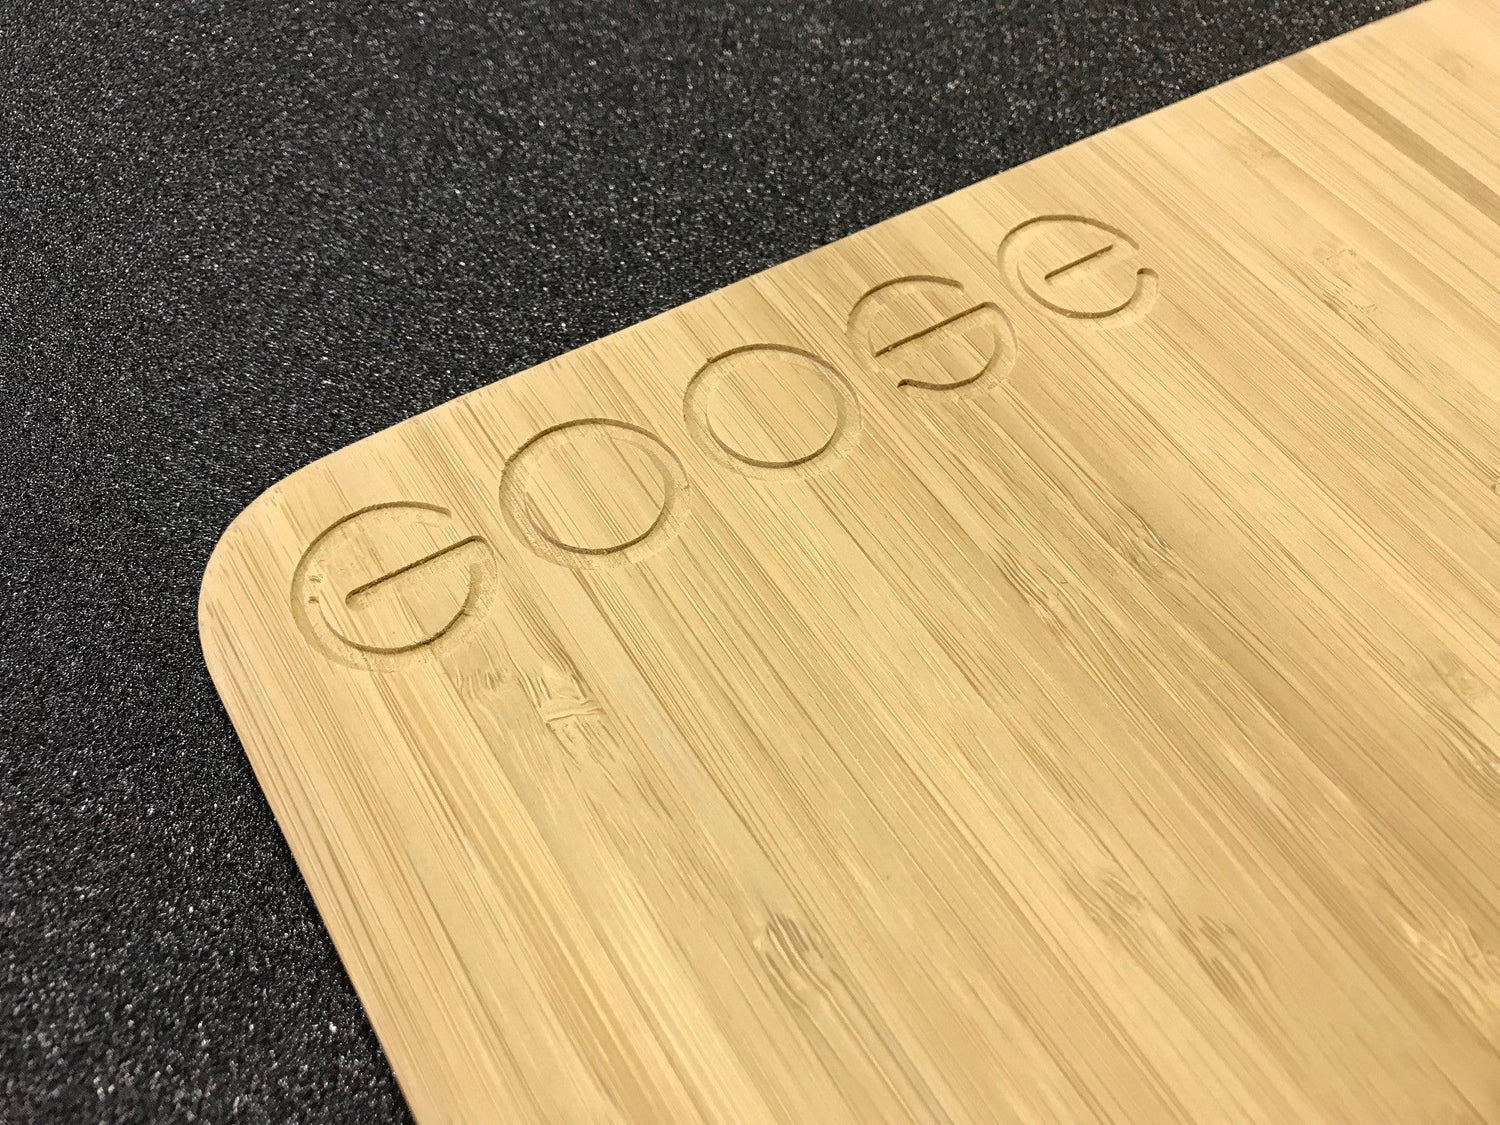 Goose Gear Goose Gear Cutting Board